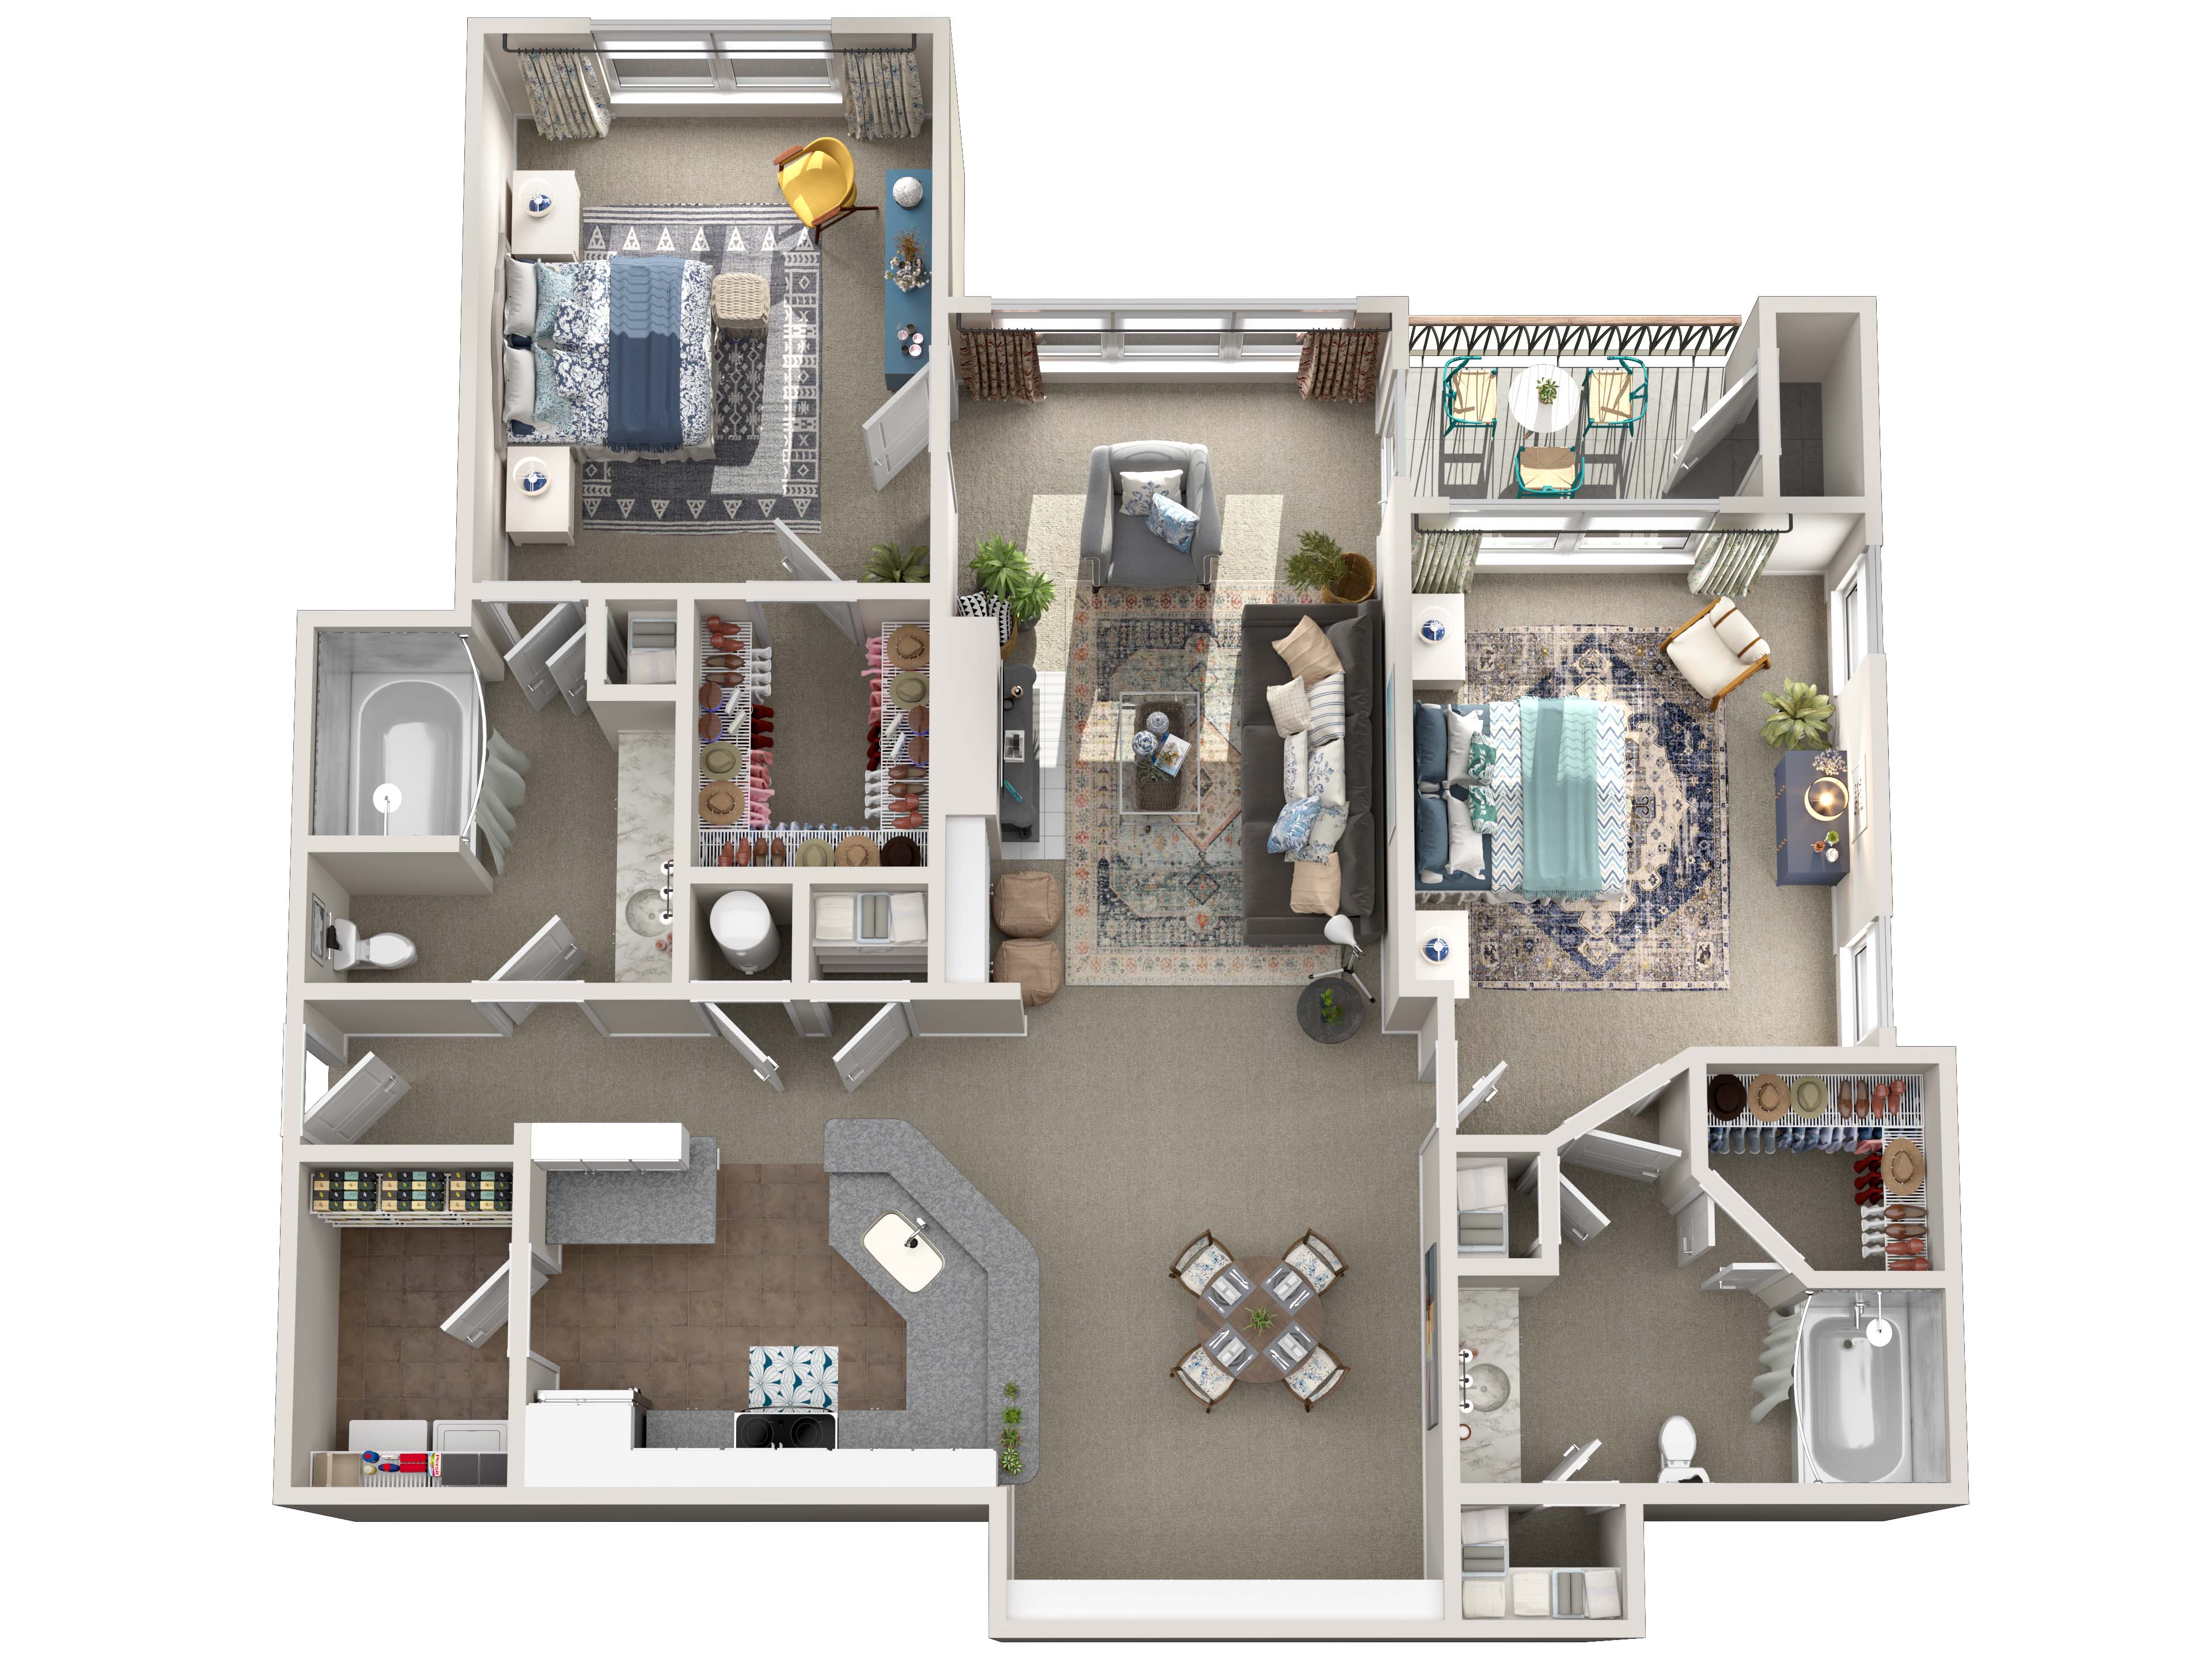 Windward Place Apartments - Floorplan - B4 | Avail. w/ Garage*